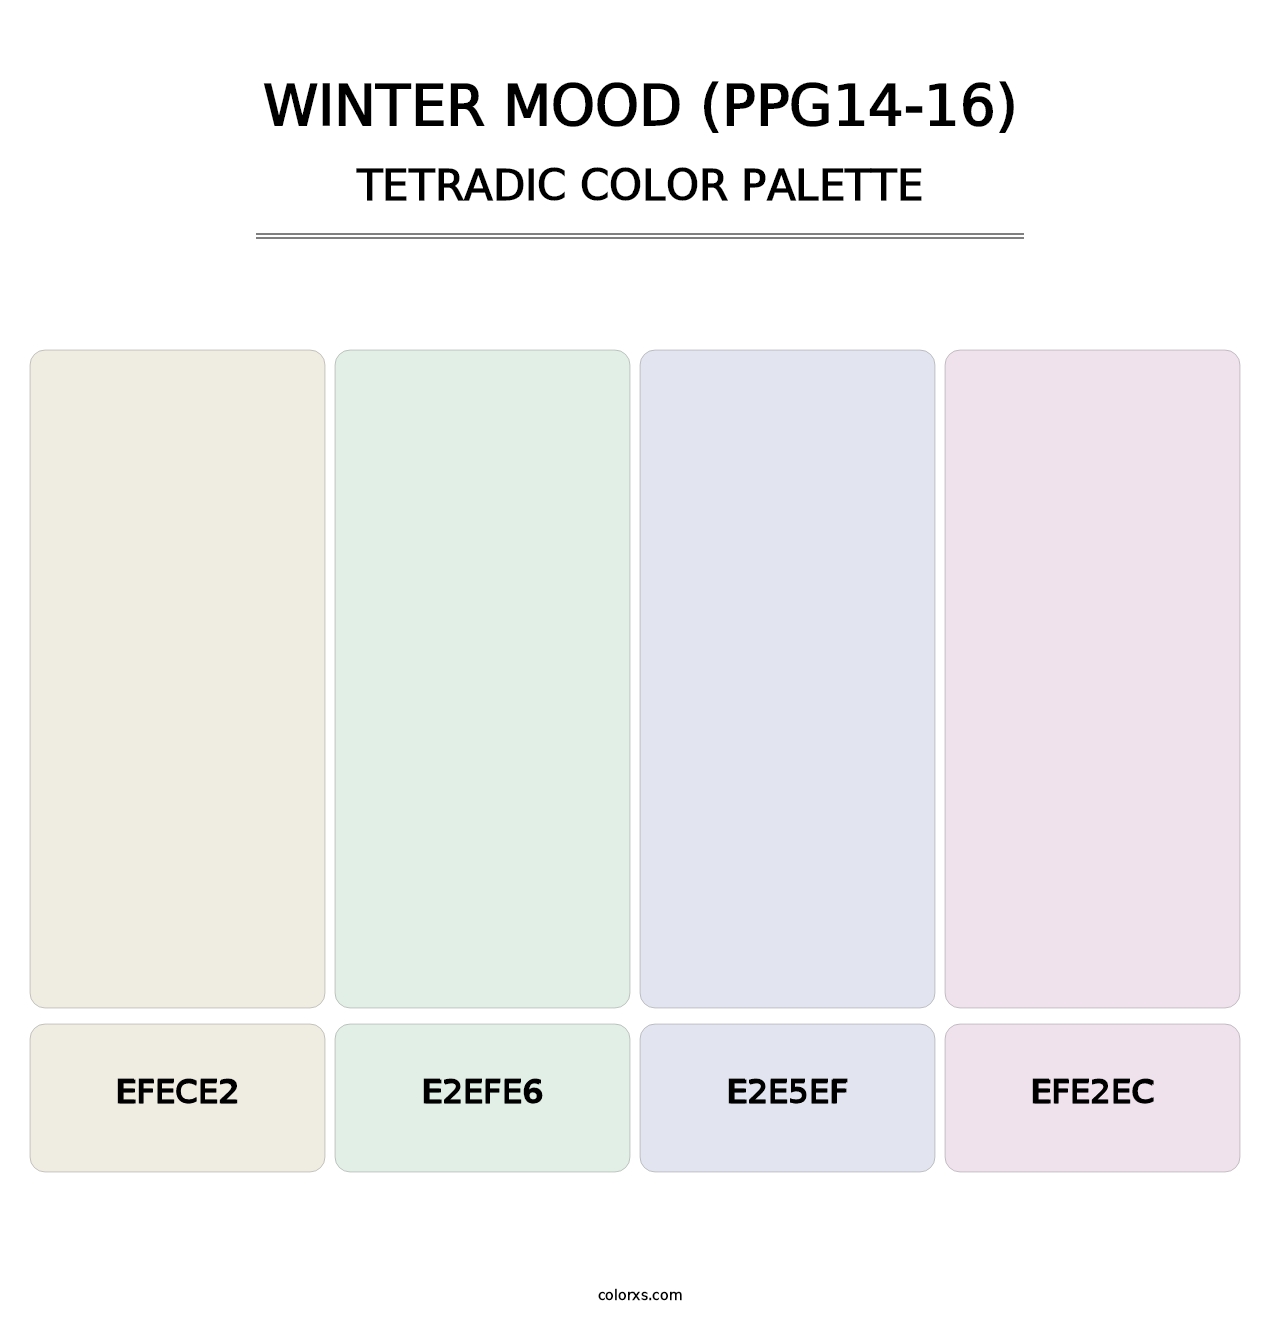 Winter Mood (PPG14-16) - Tetradic Color Palette